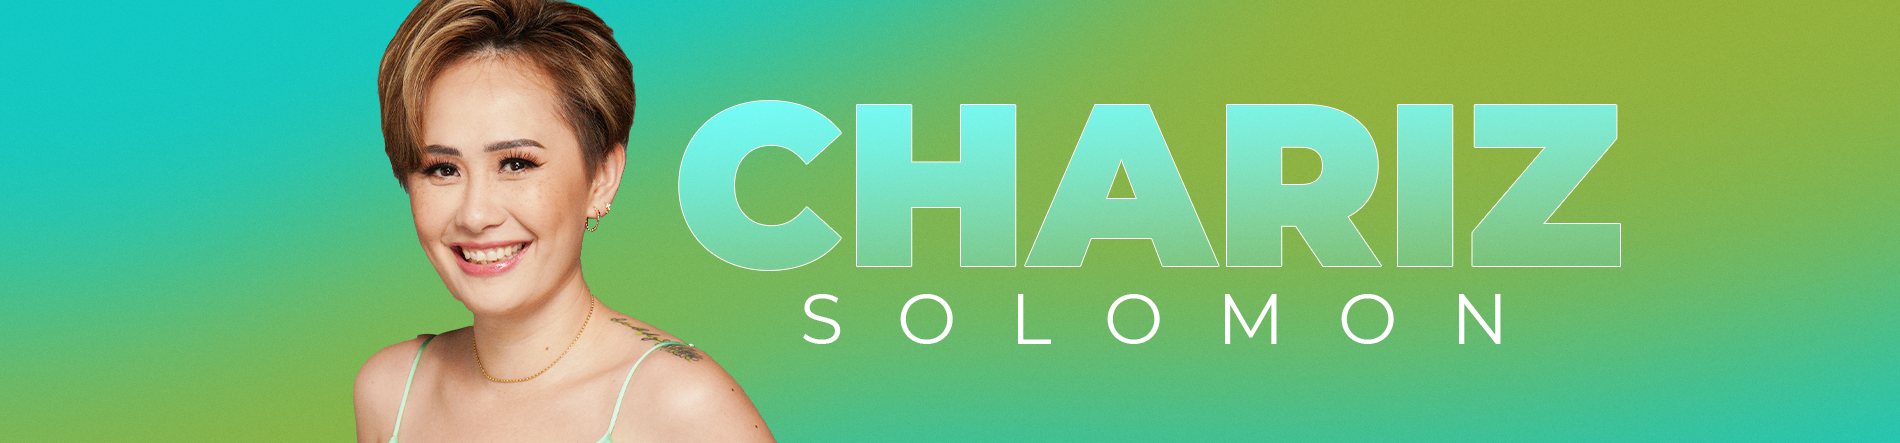 Chariz Solomon Desktop Banner